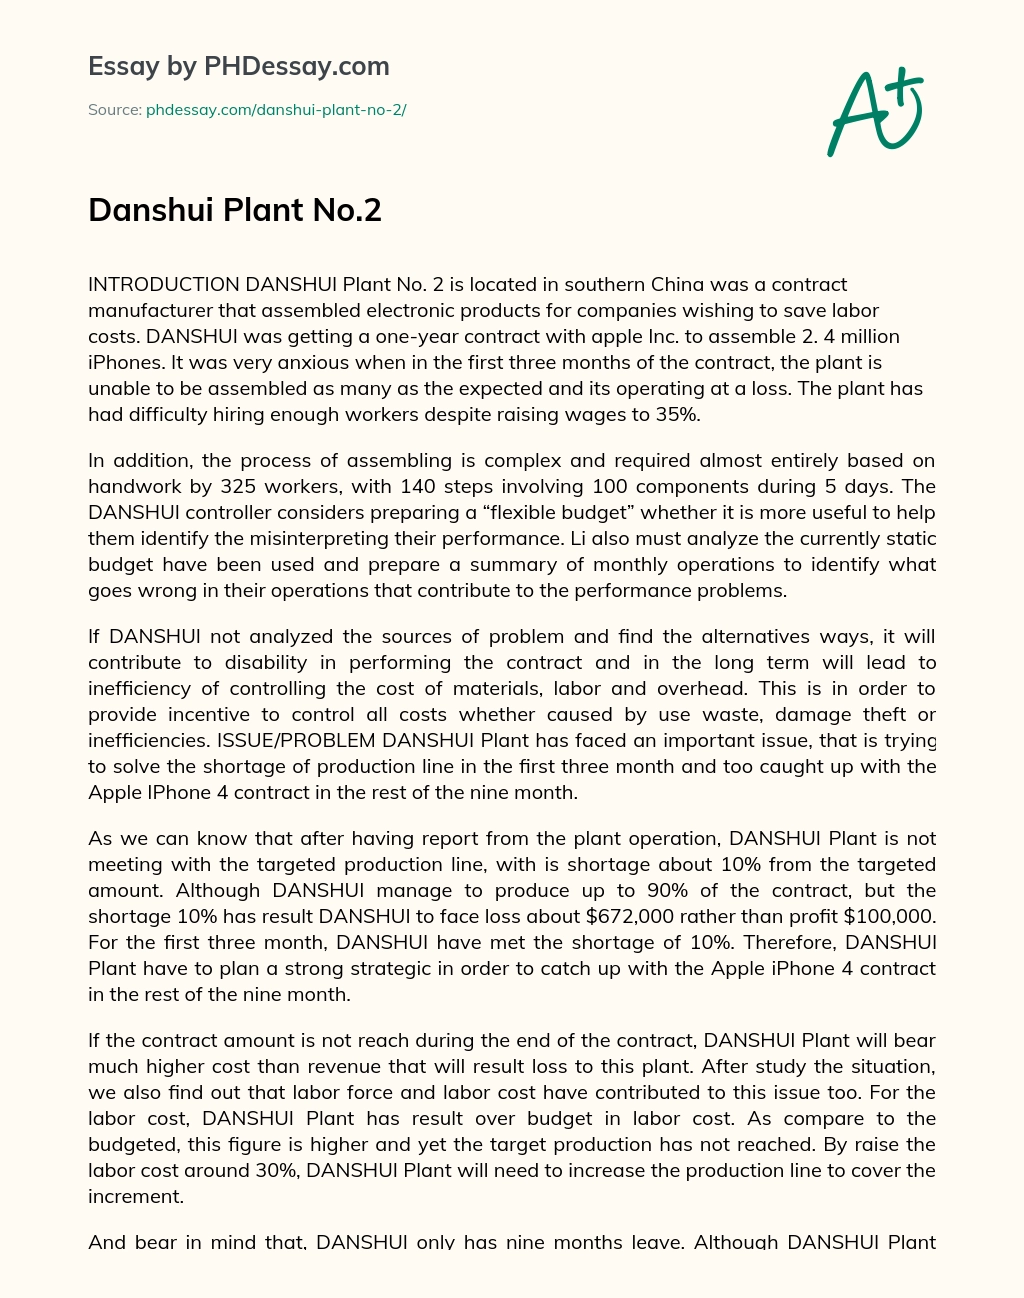 Danshui Plant No.2 essay